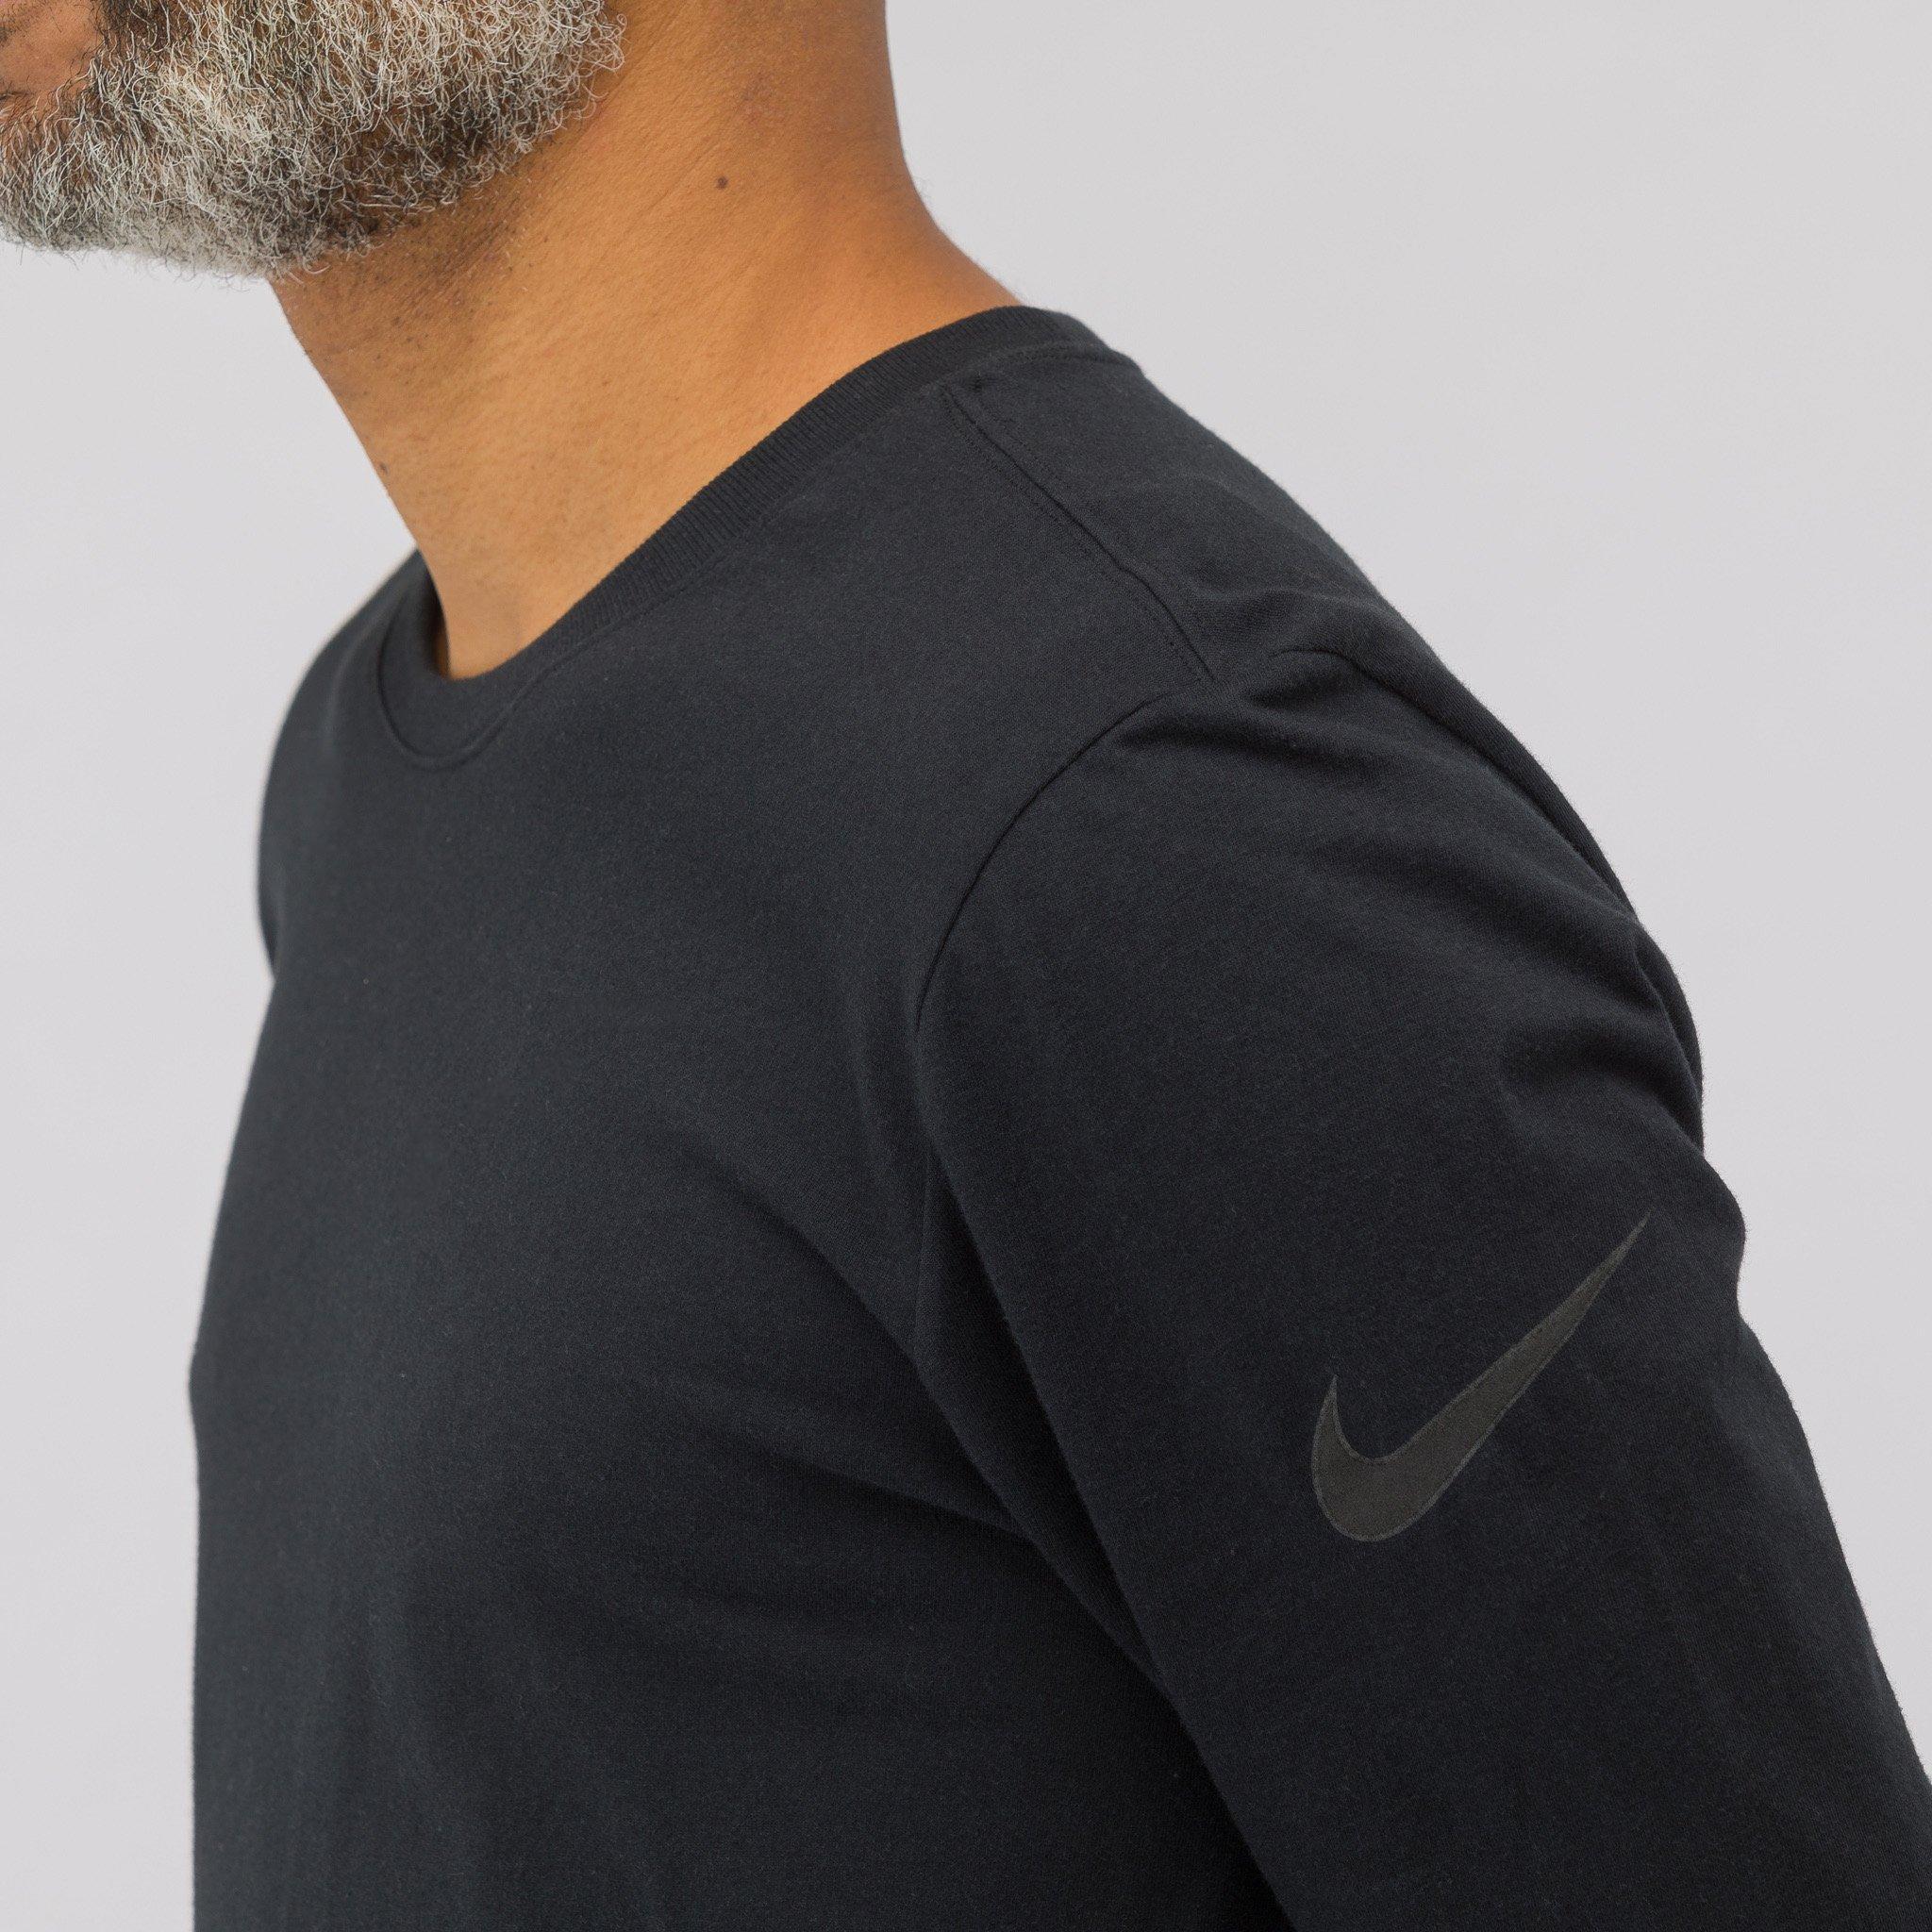 Colin Kaepernick Long Sleeve Shirts Nike Austria, SAVE 47% - mpgc.net